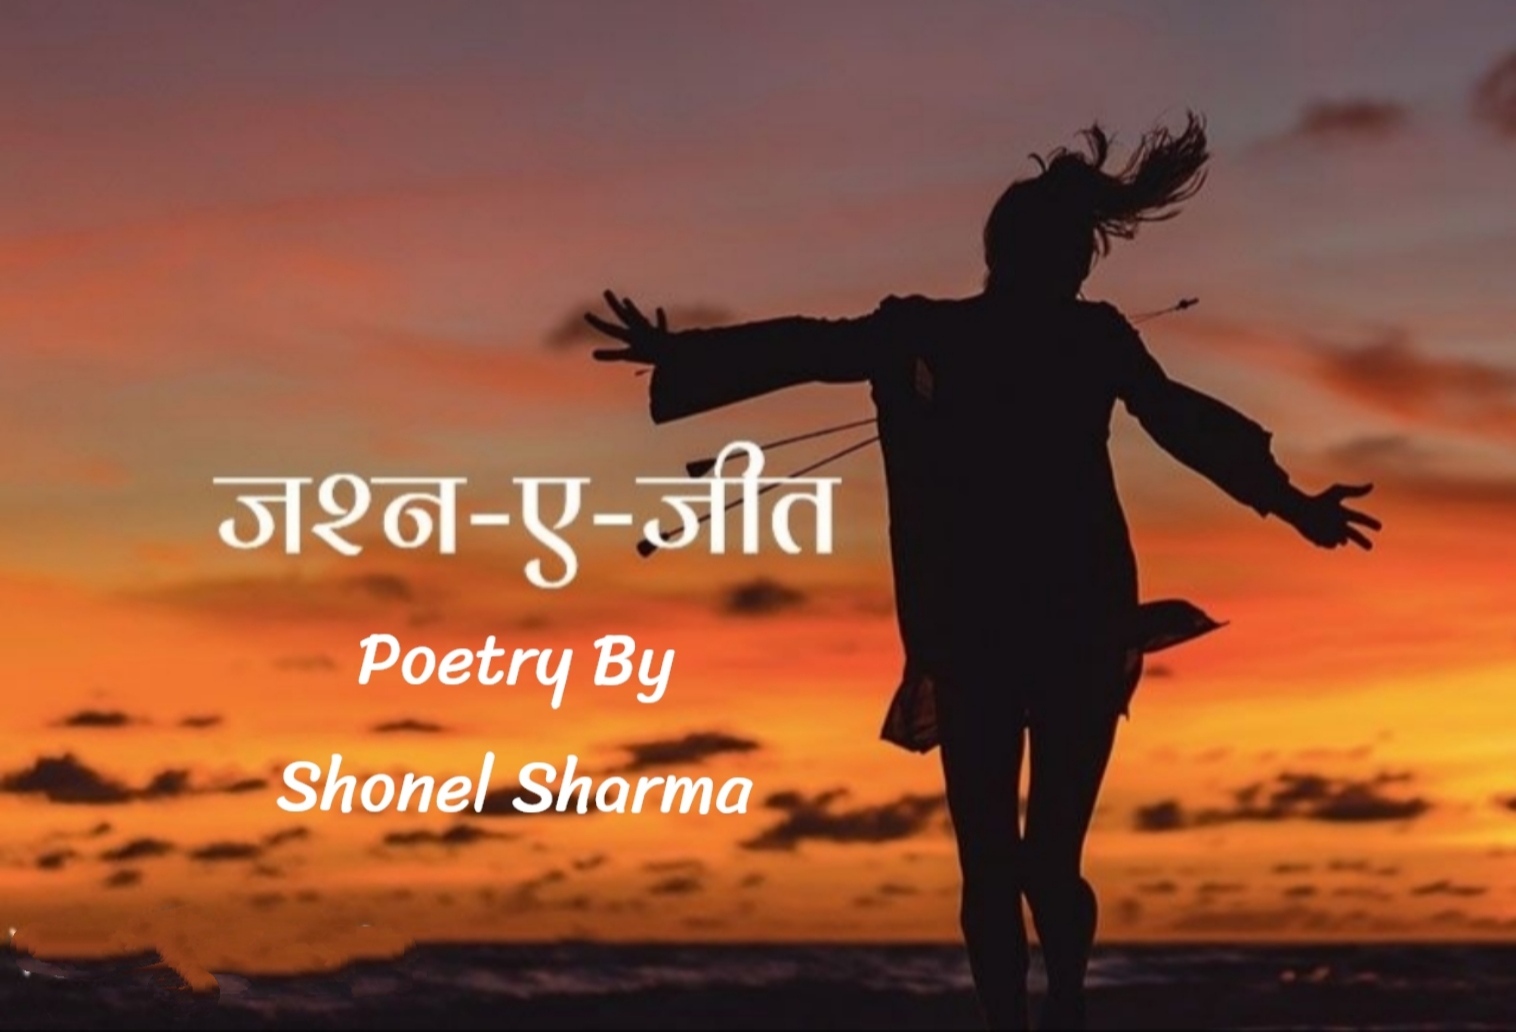 जश्न-ए-जीत - Poetry By Shonel Sharma